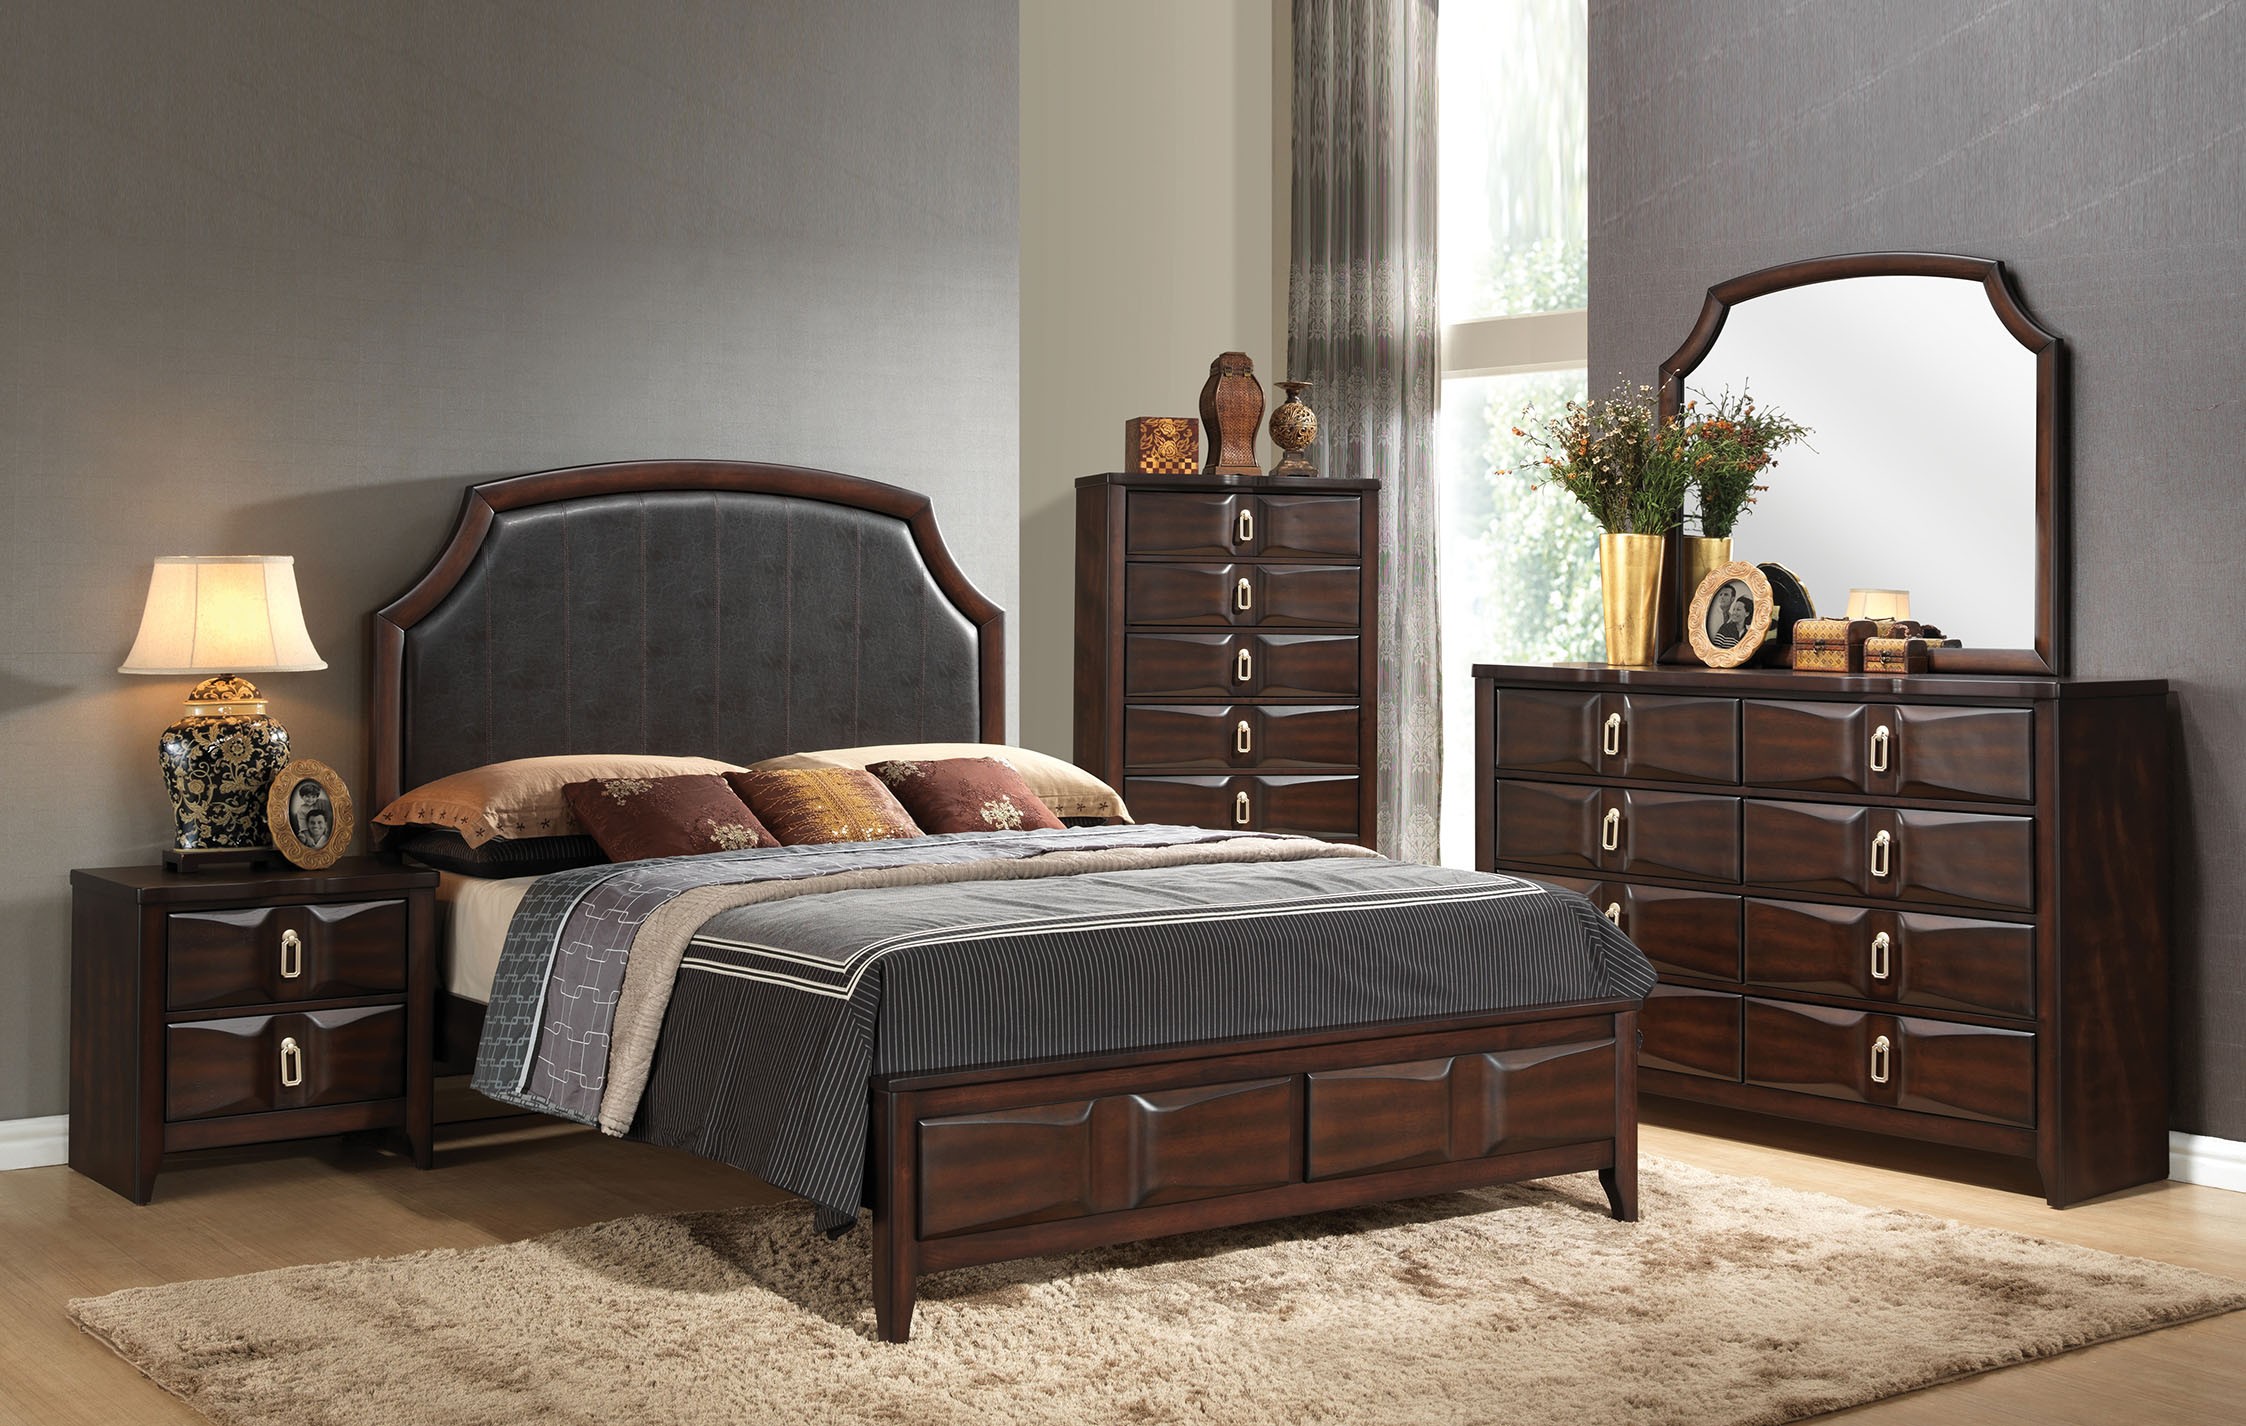 fitted bedroom furniture lancaster